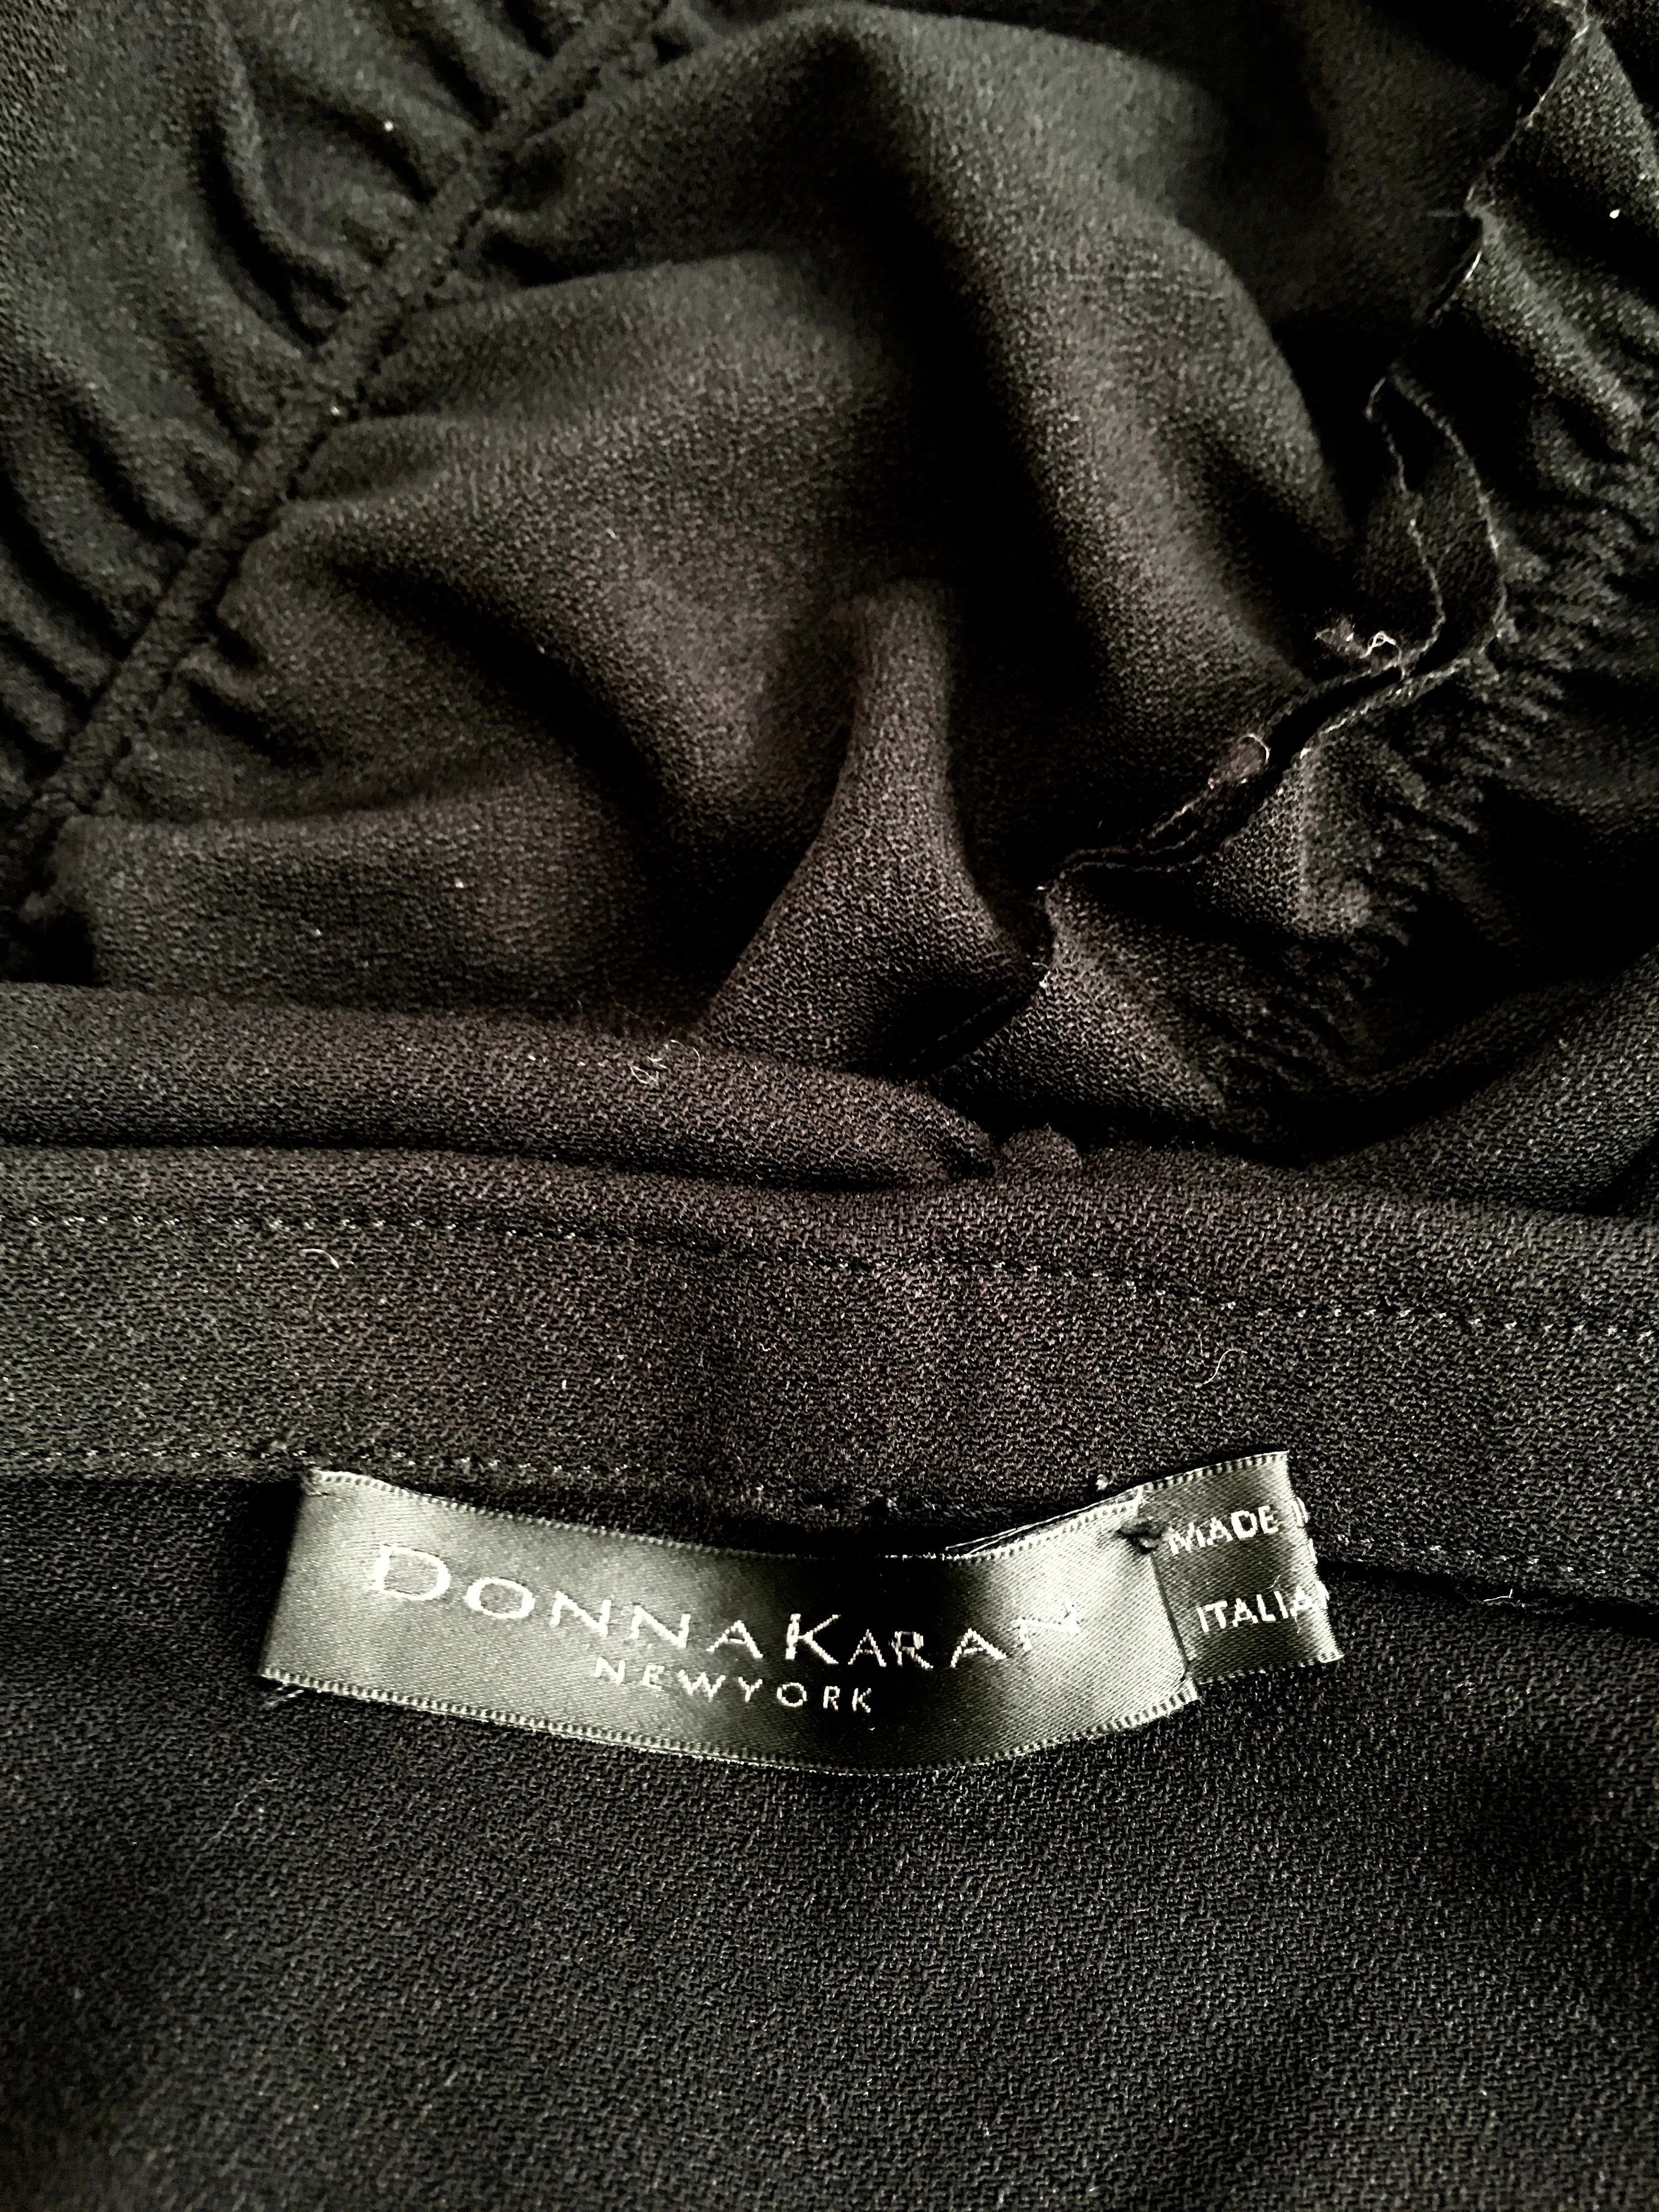 Donna Karan Black Parachute Dress Size 6. For Sale 13